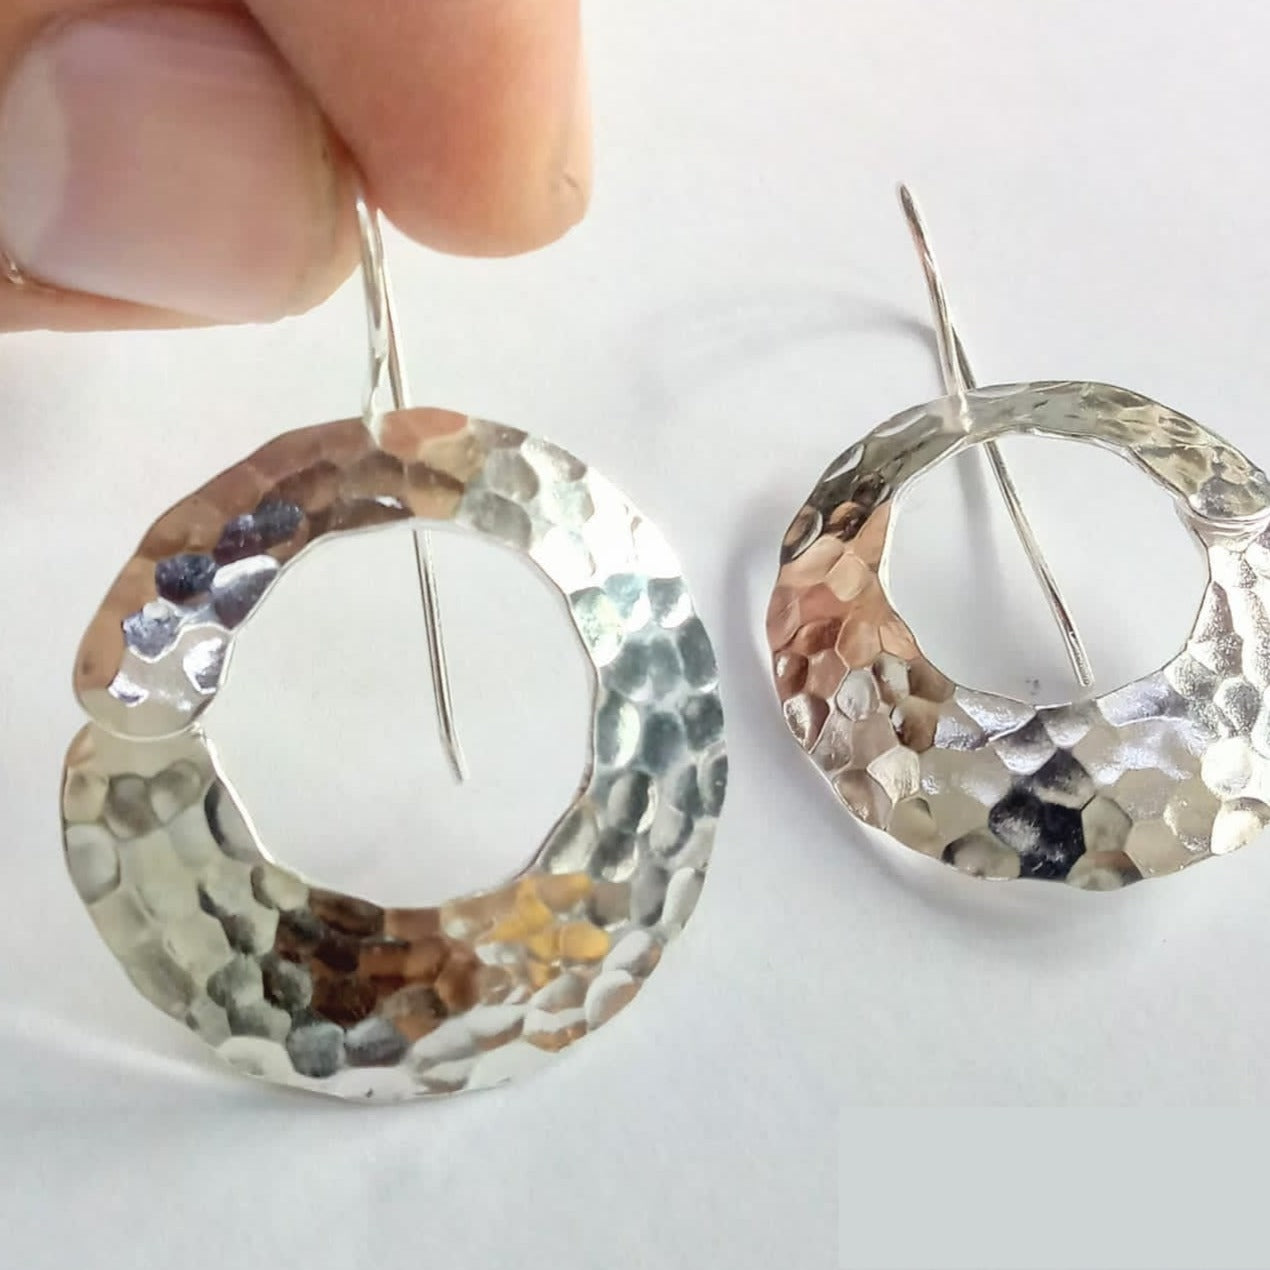 Circular Pearl Drop Earring Aham Jewellery – aham jewellery